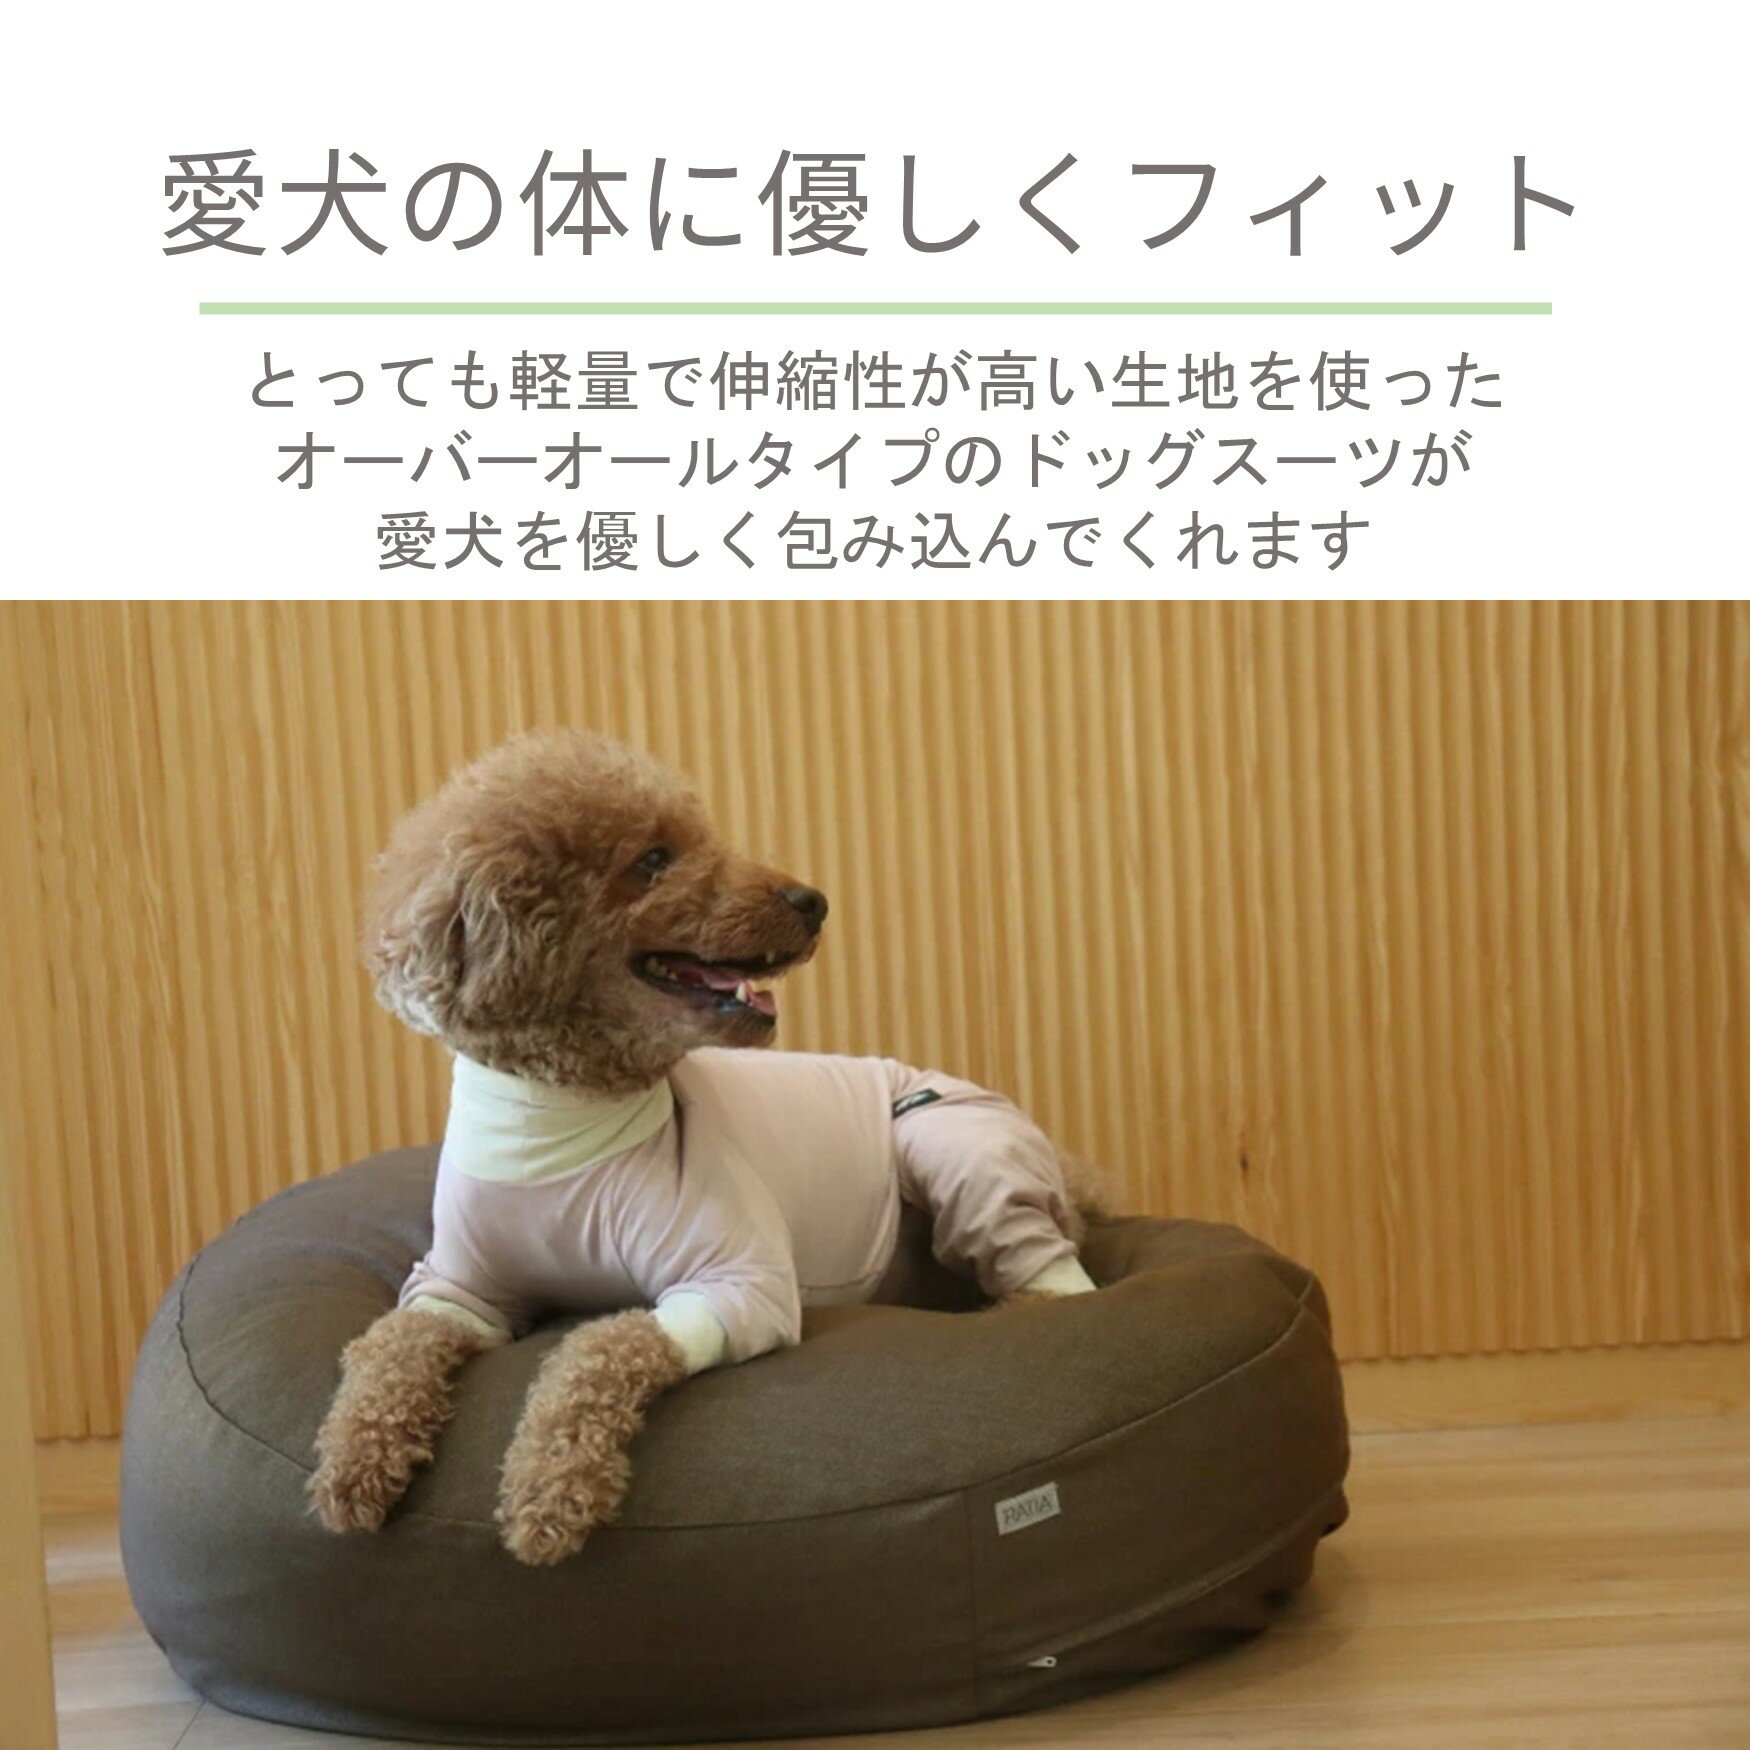 [Hakusan]愛犬の体に優しくフィットする軽量オーバーオール【エアメッシュドッグスーツ】 3